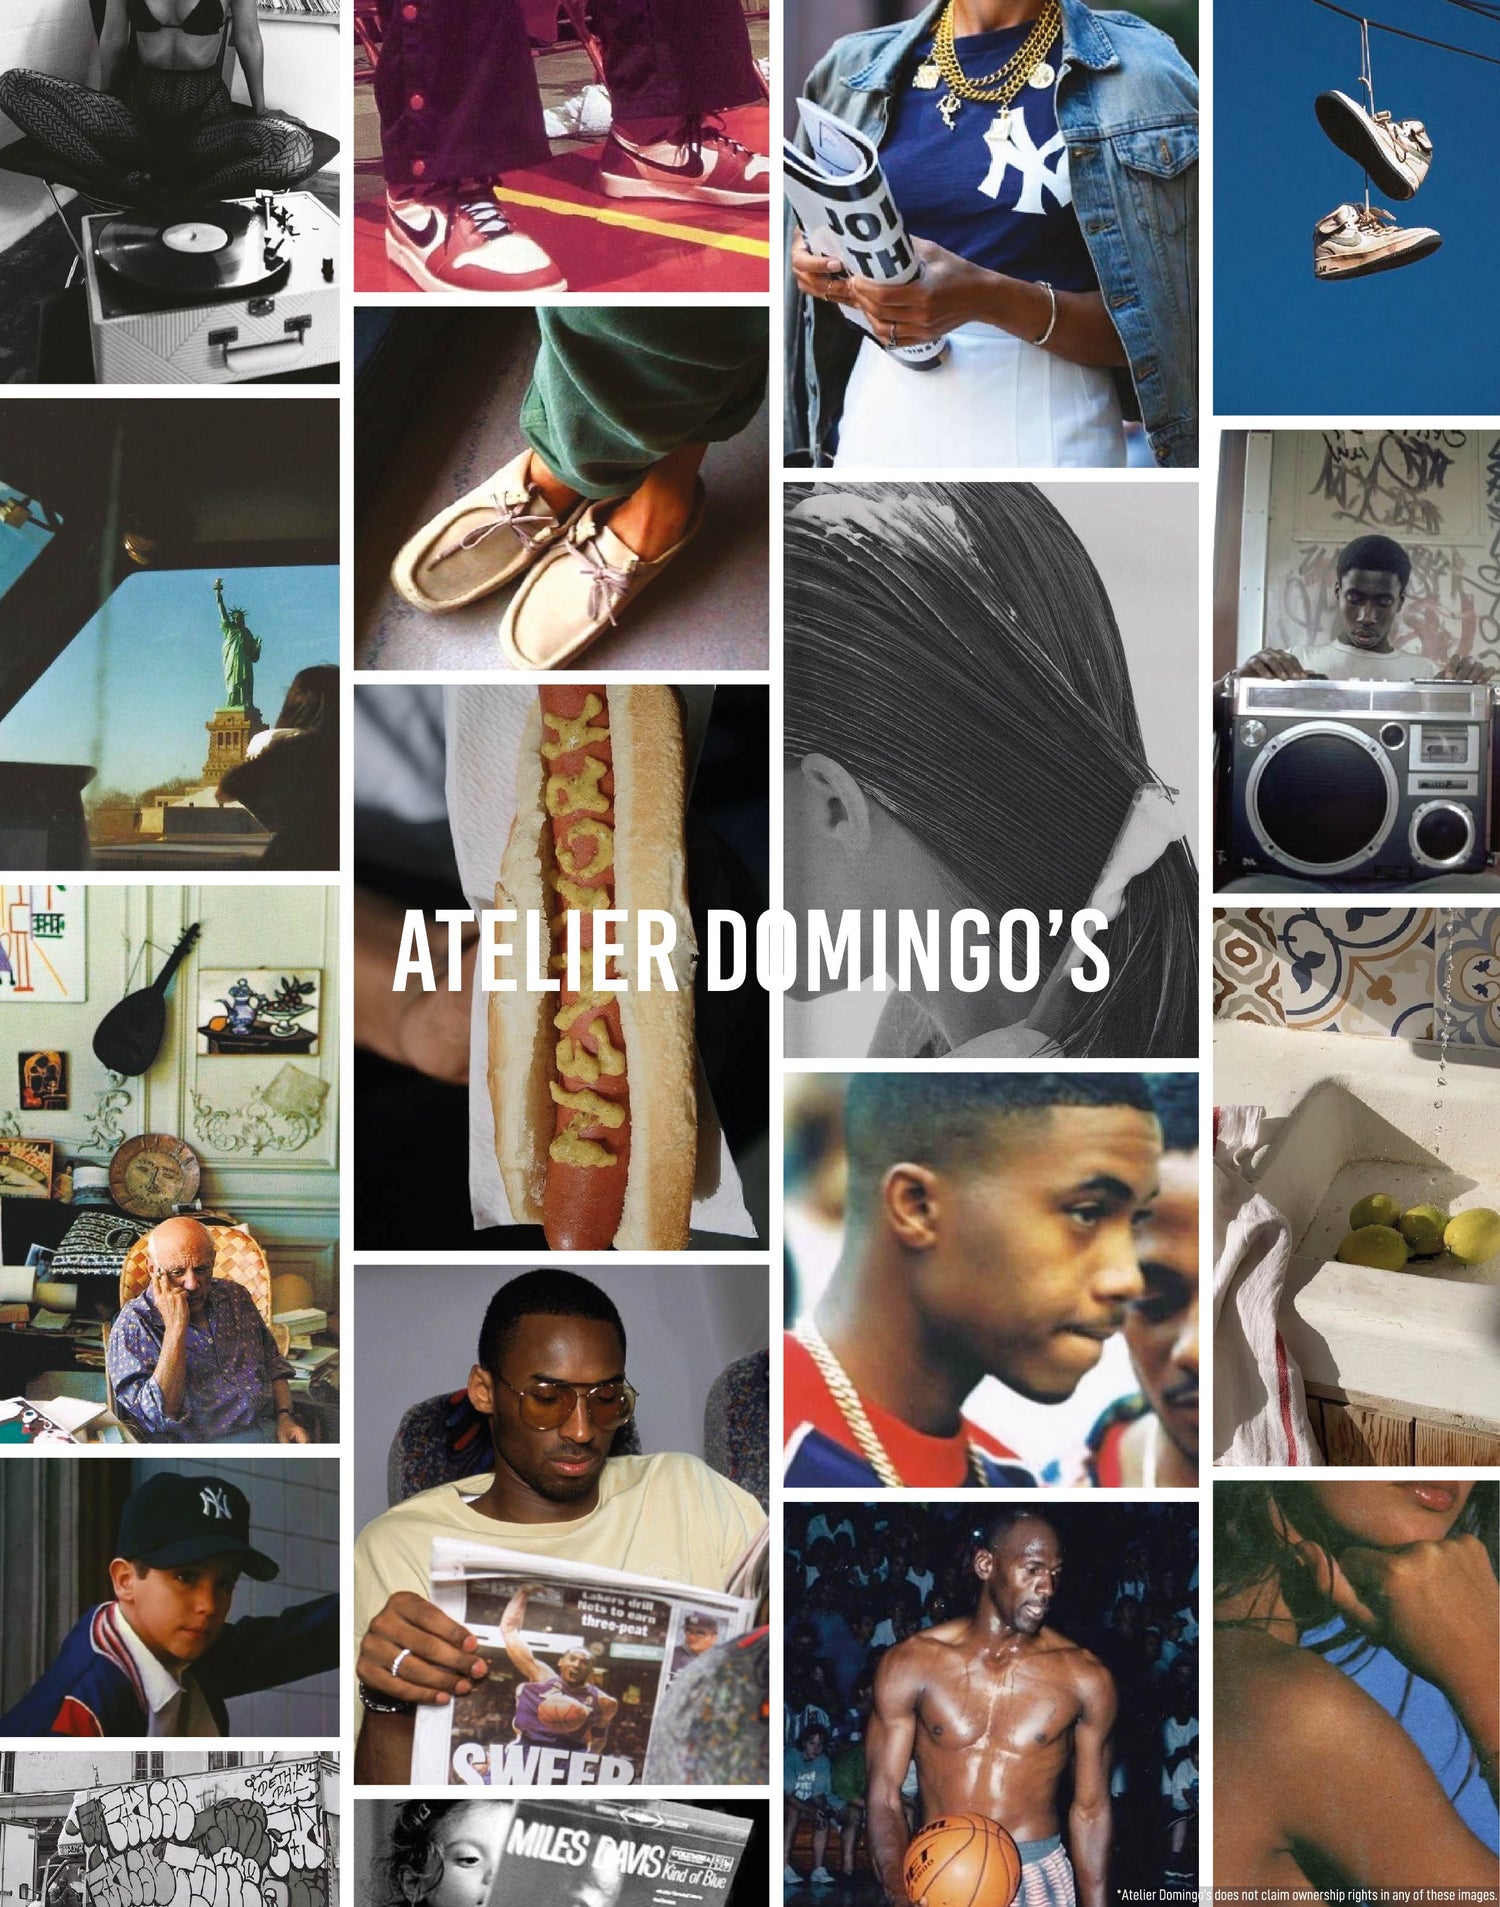 Atelier Domingo's inspirations - hip hop artists like Nas, athletes like Mickael Jordan or Kobe Bryant, artist like Picasso or brands that became culture like Clarks, Jordan. 